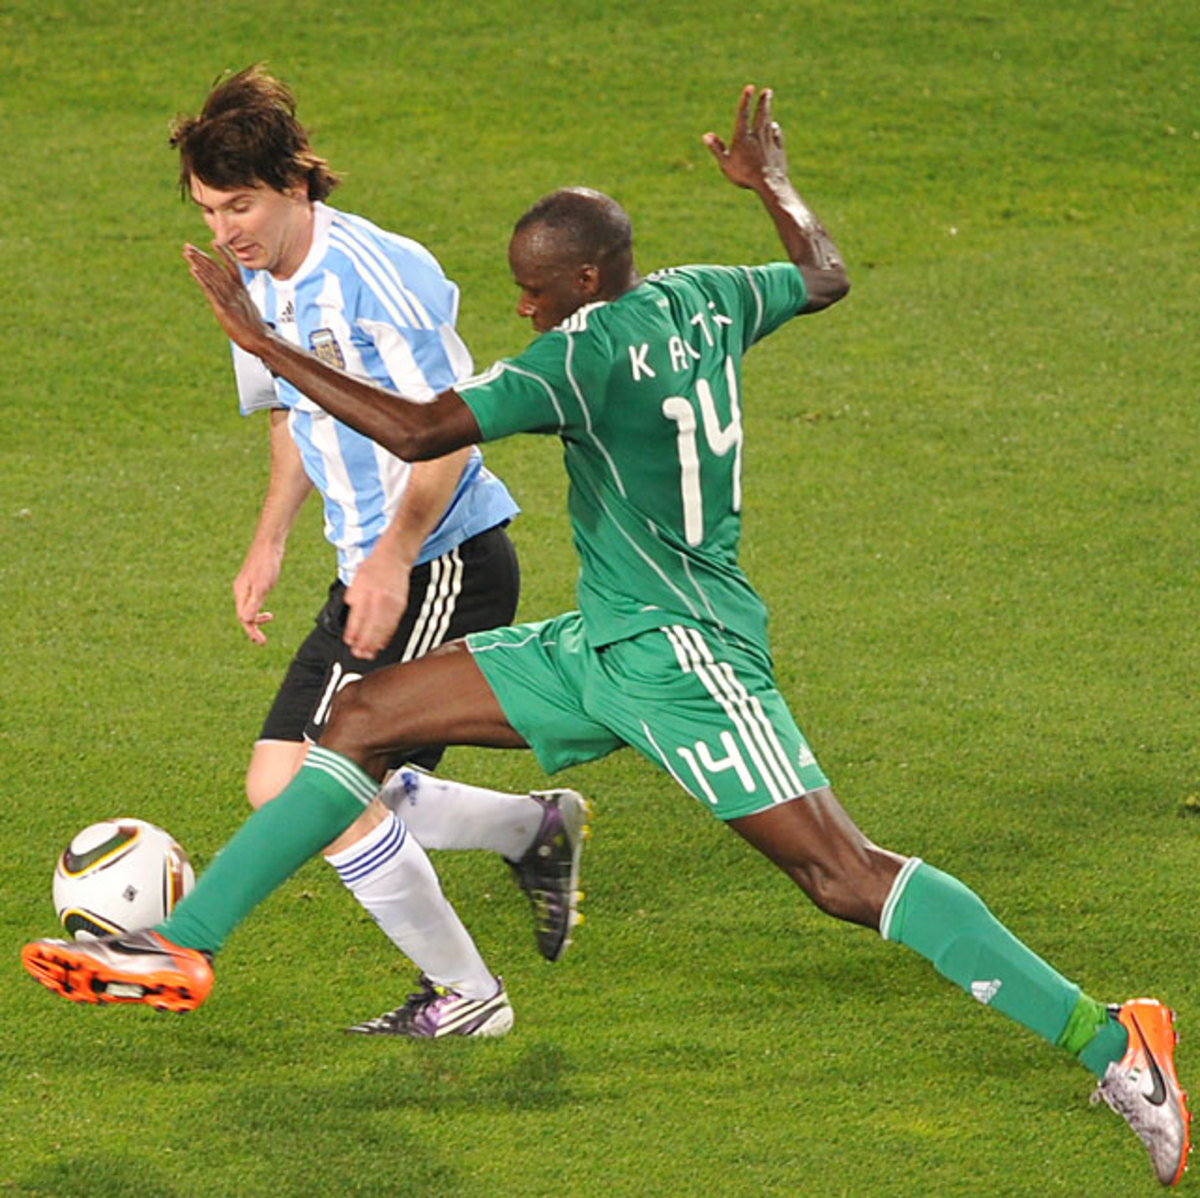 Group B - Argentina 1, Nigeria 0